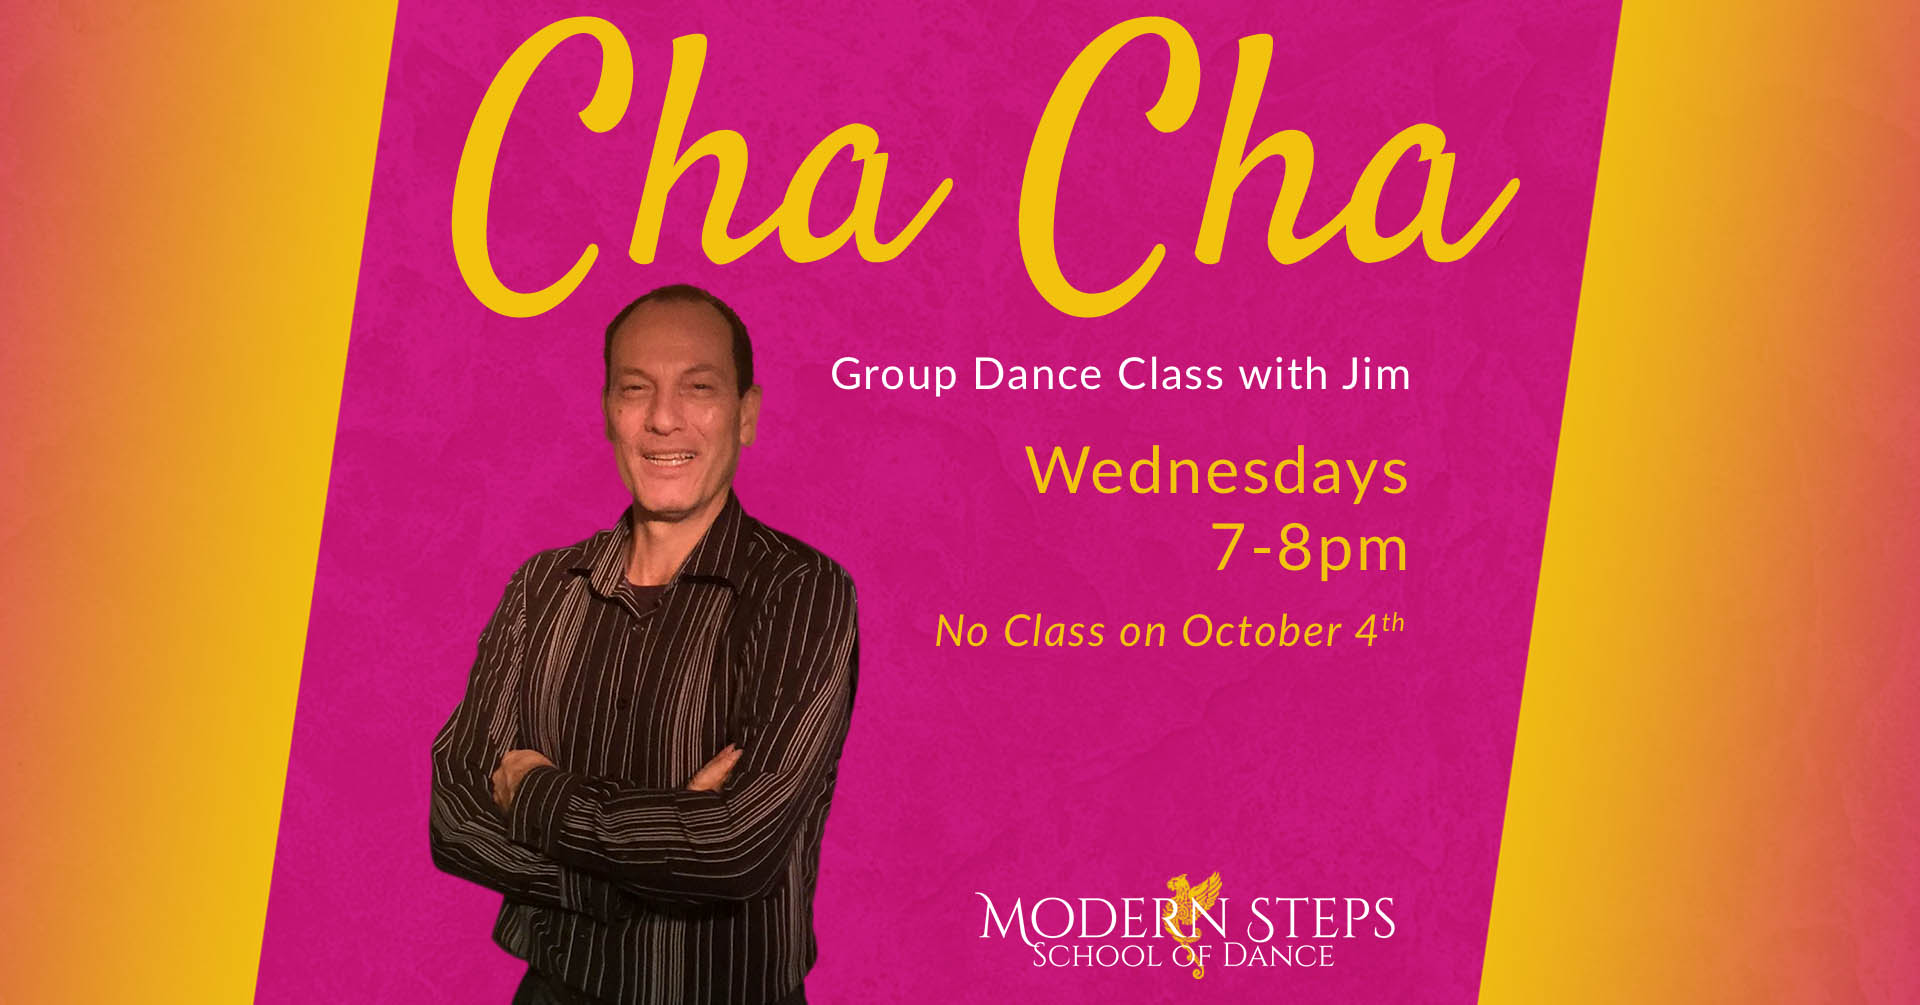 Modern Steps School of Dance Naples Florida The Cha Cha Dance Classes - Group Ballroom Dance Lessons